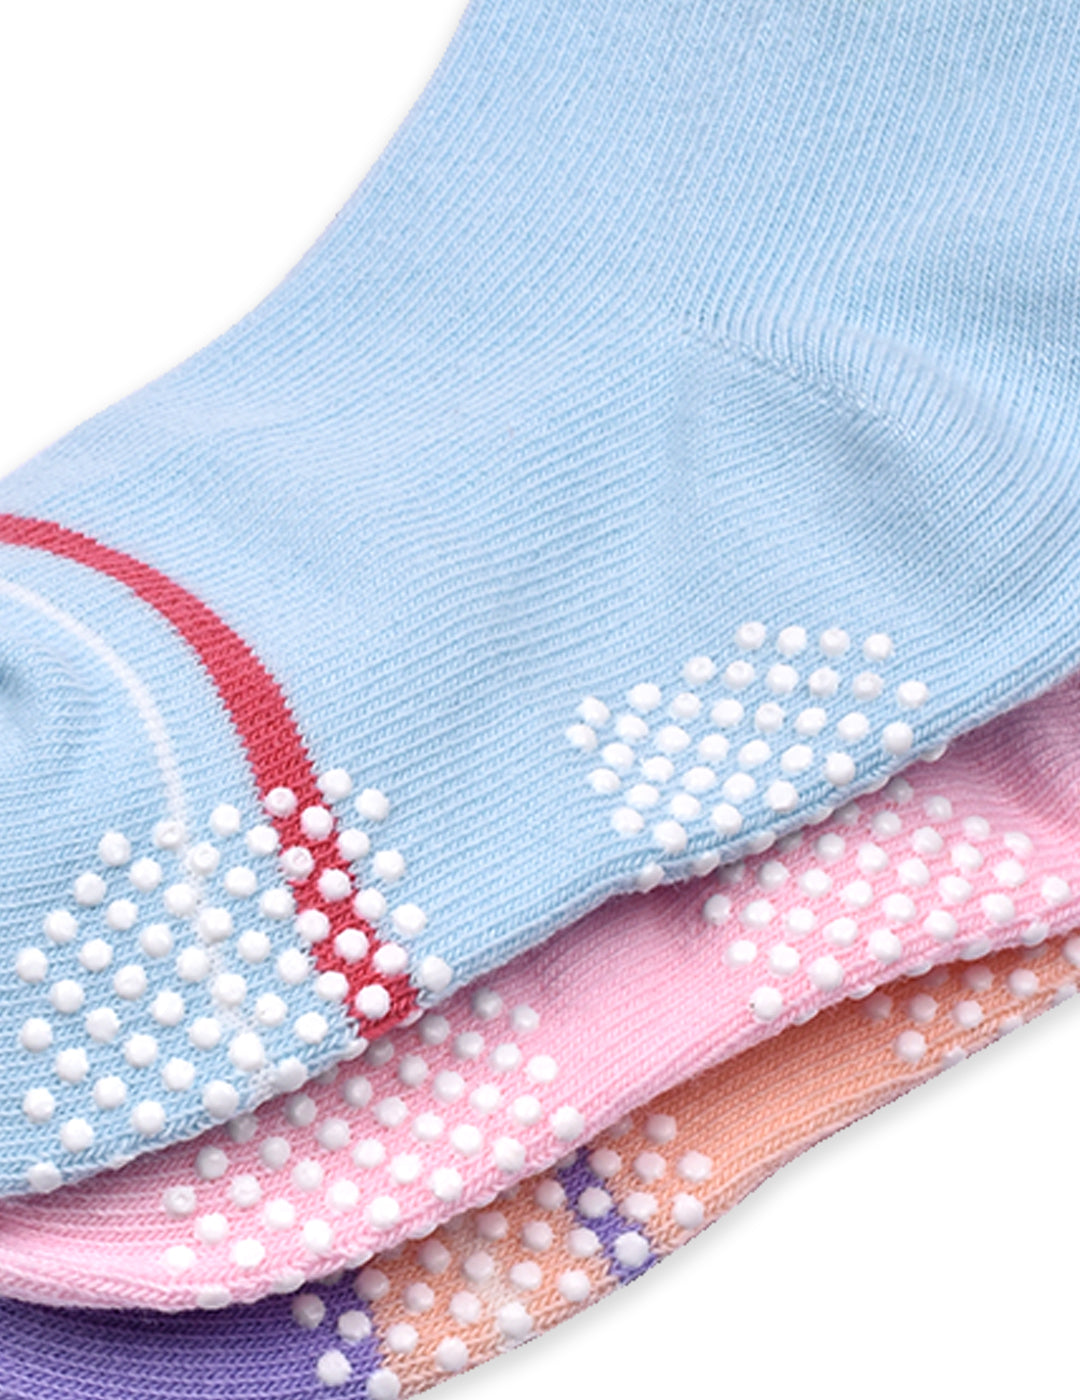 Baby Organic Cotton Girls Antiskid Socks, Patterned Mix Designs - Pack of 3